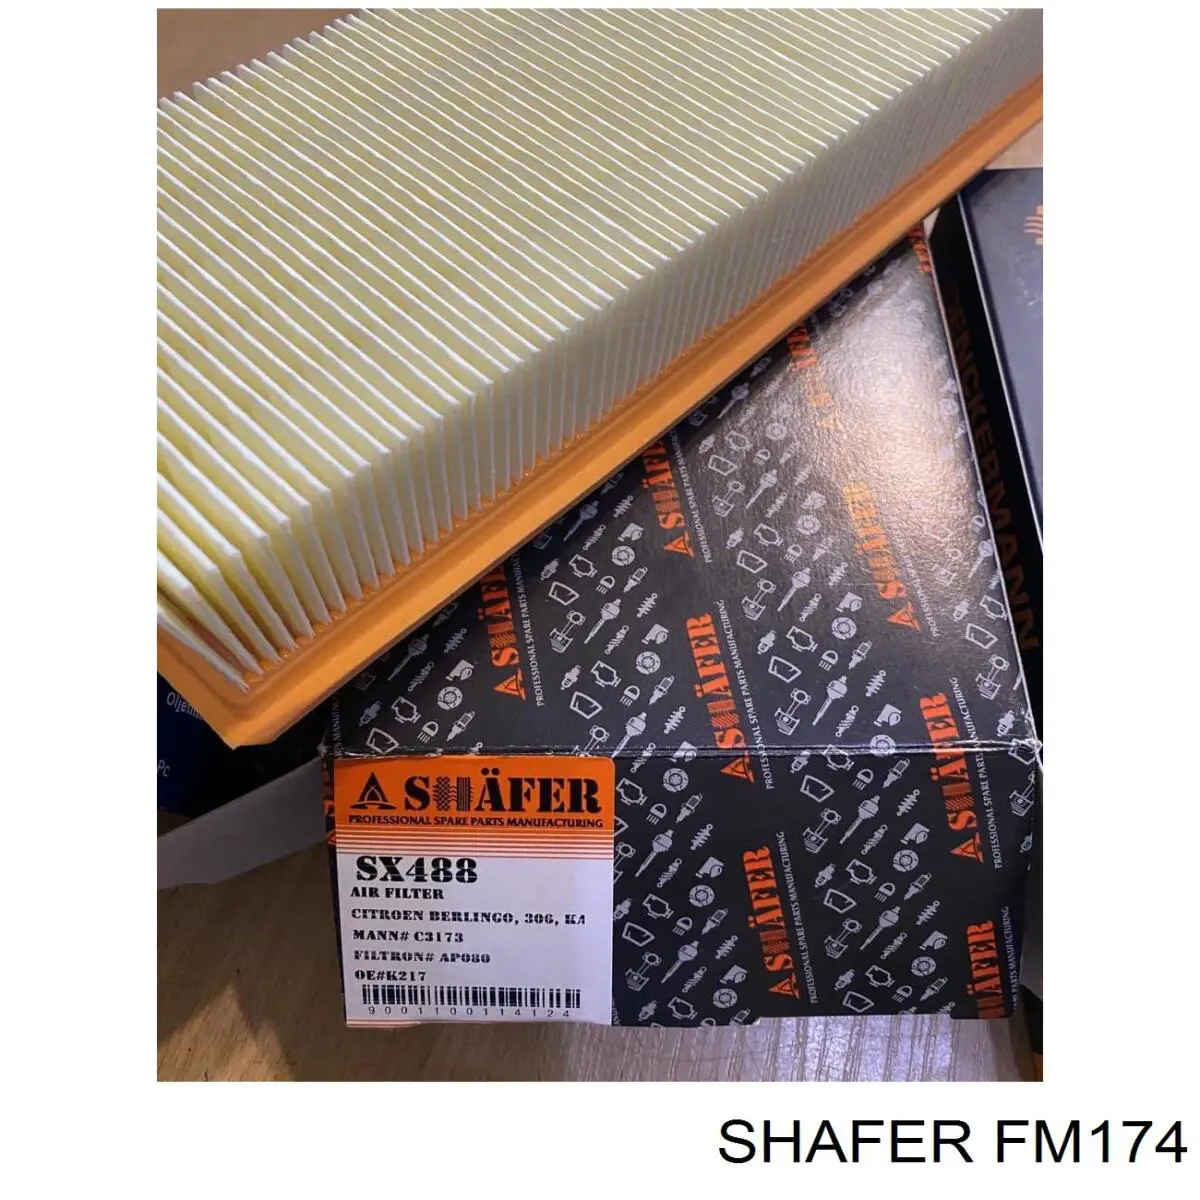 FM174 Shafer filtro combustible